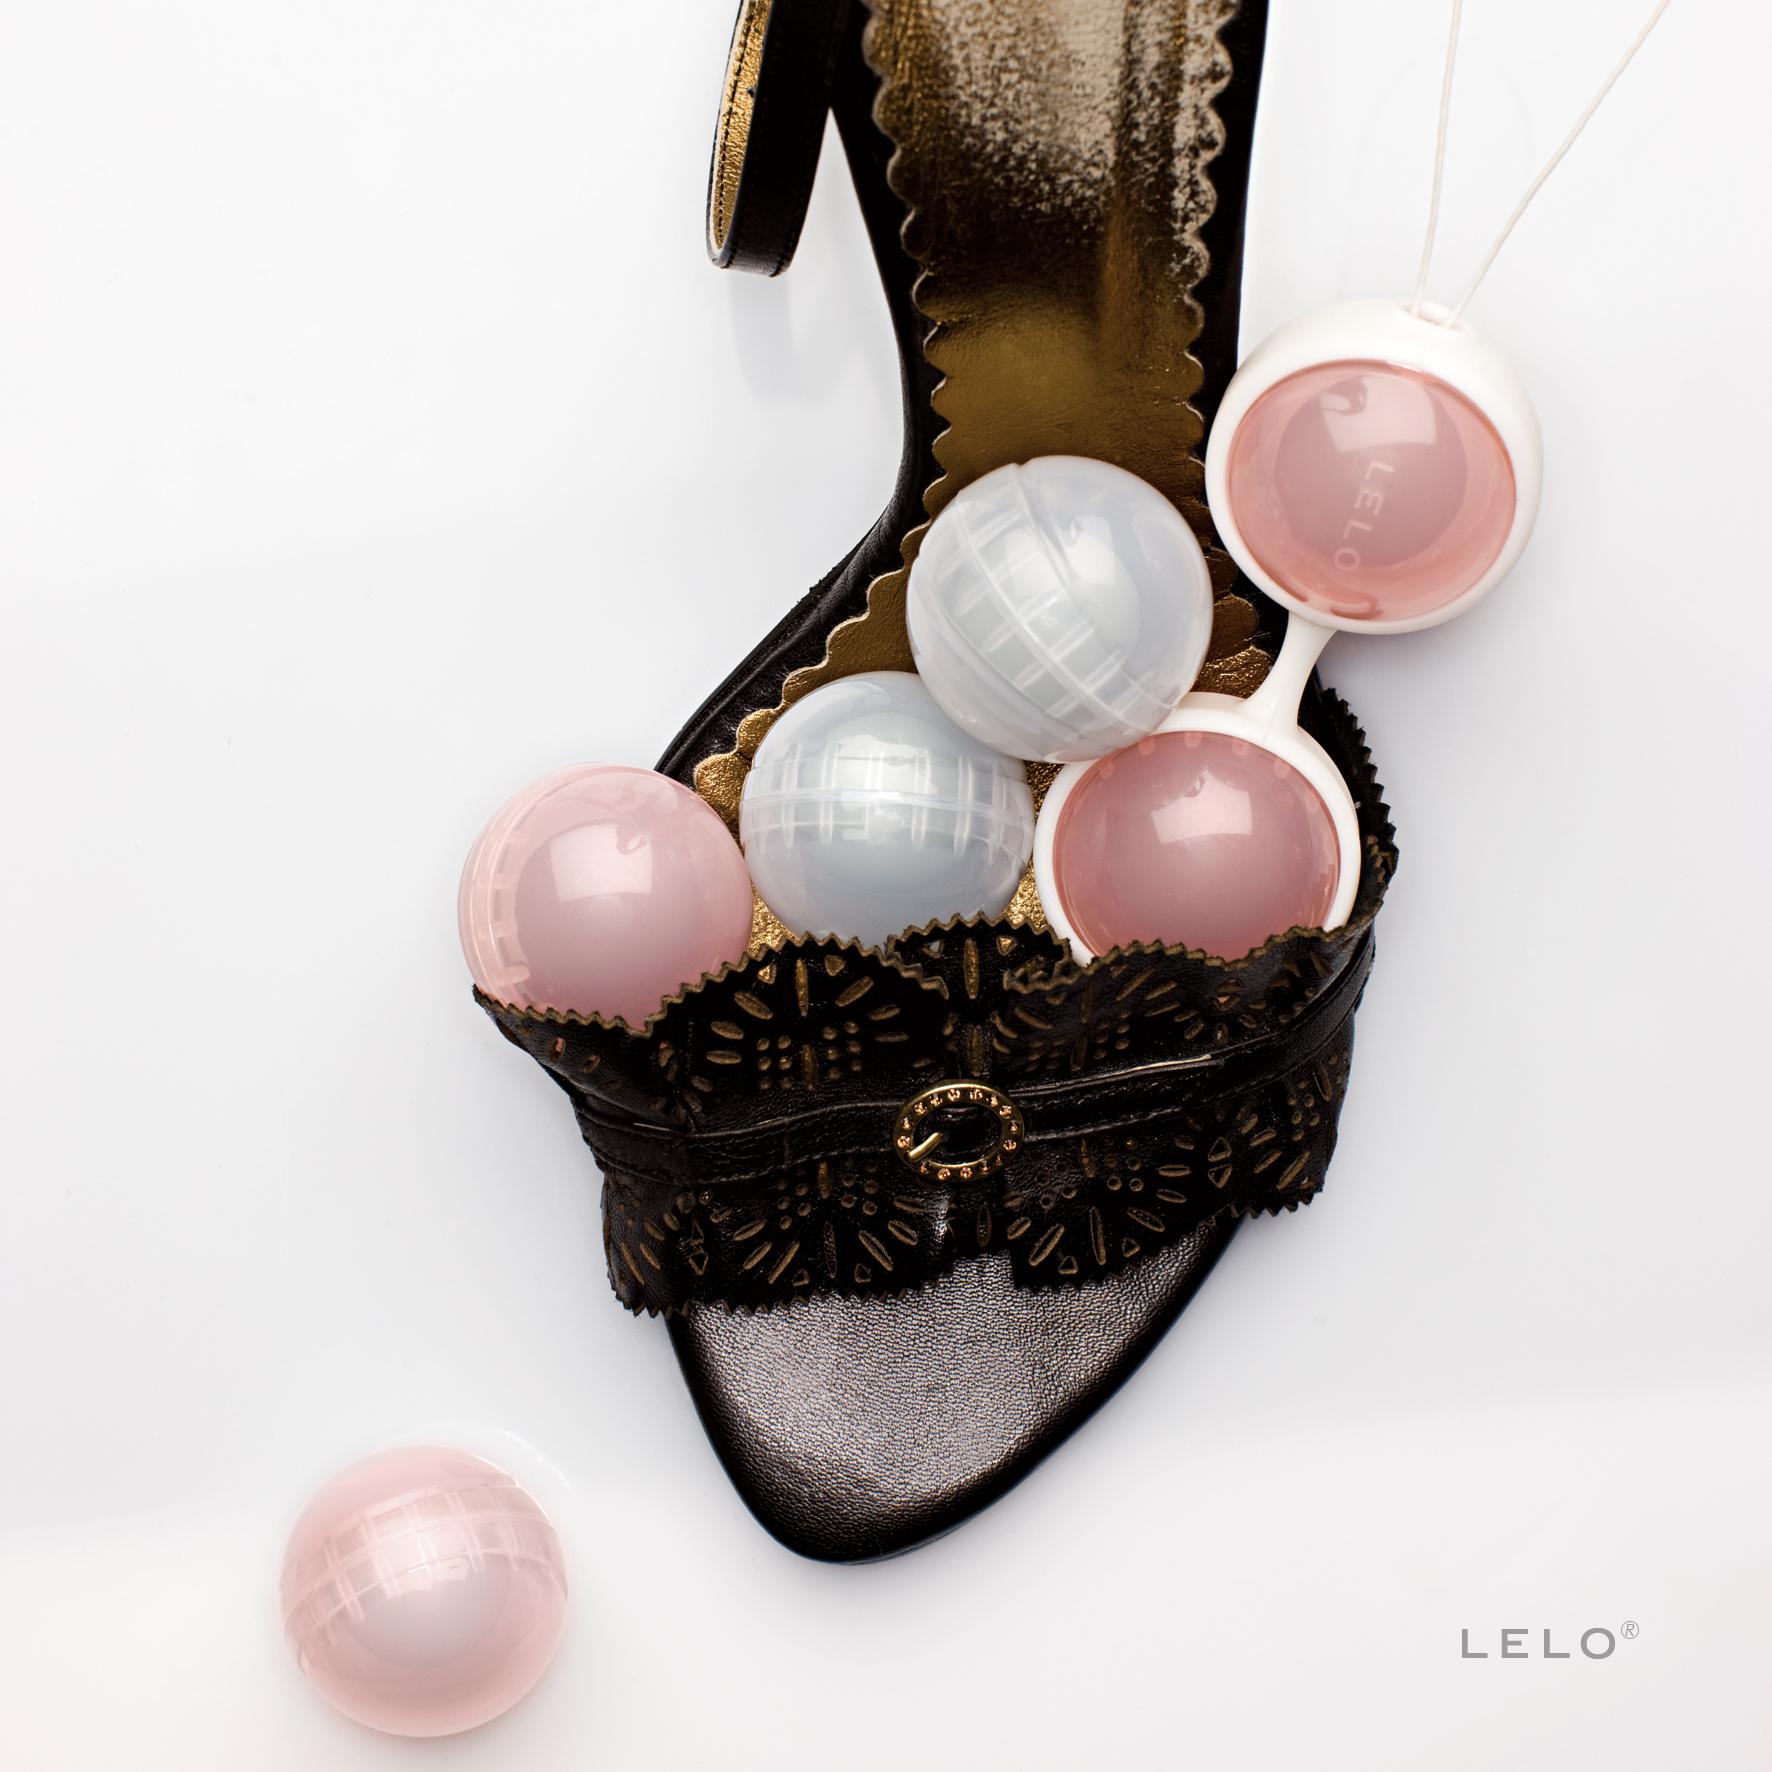 Lelo - Luna Beads - Venušine Guličky